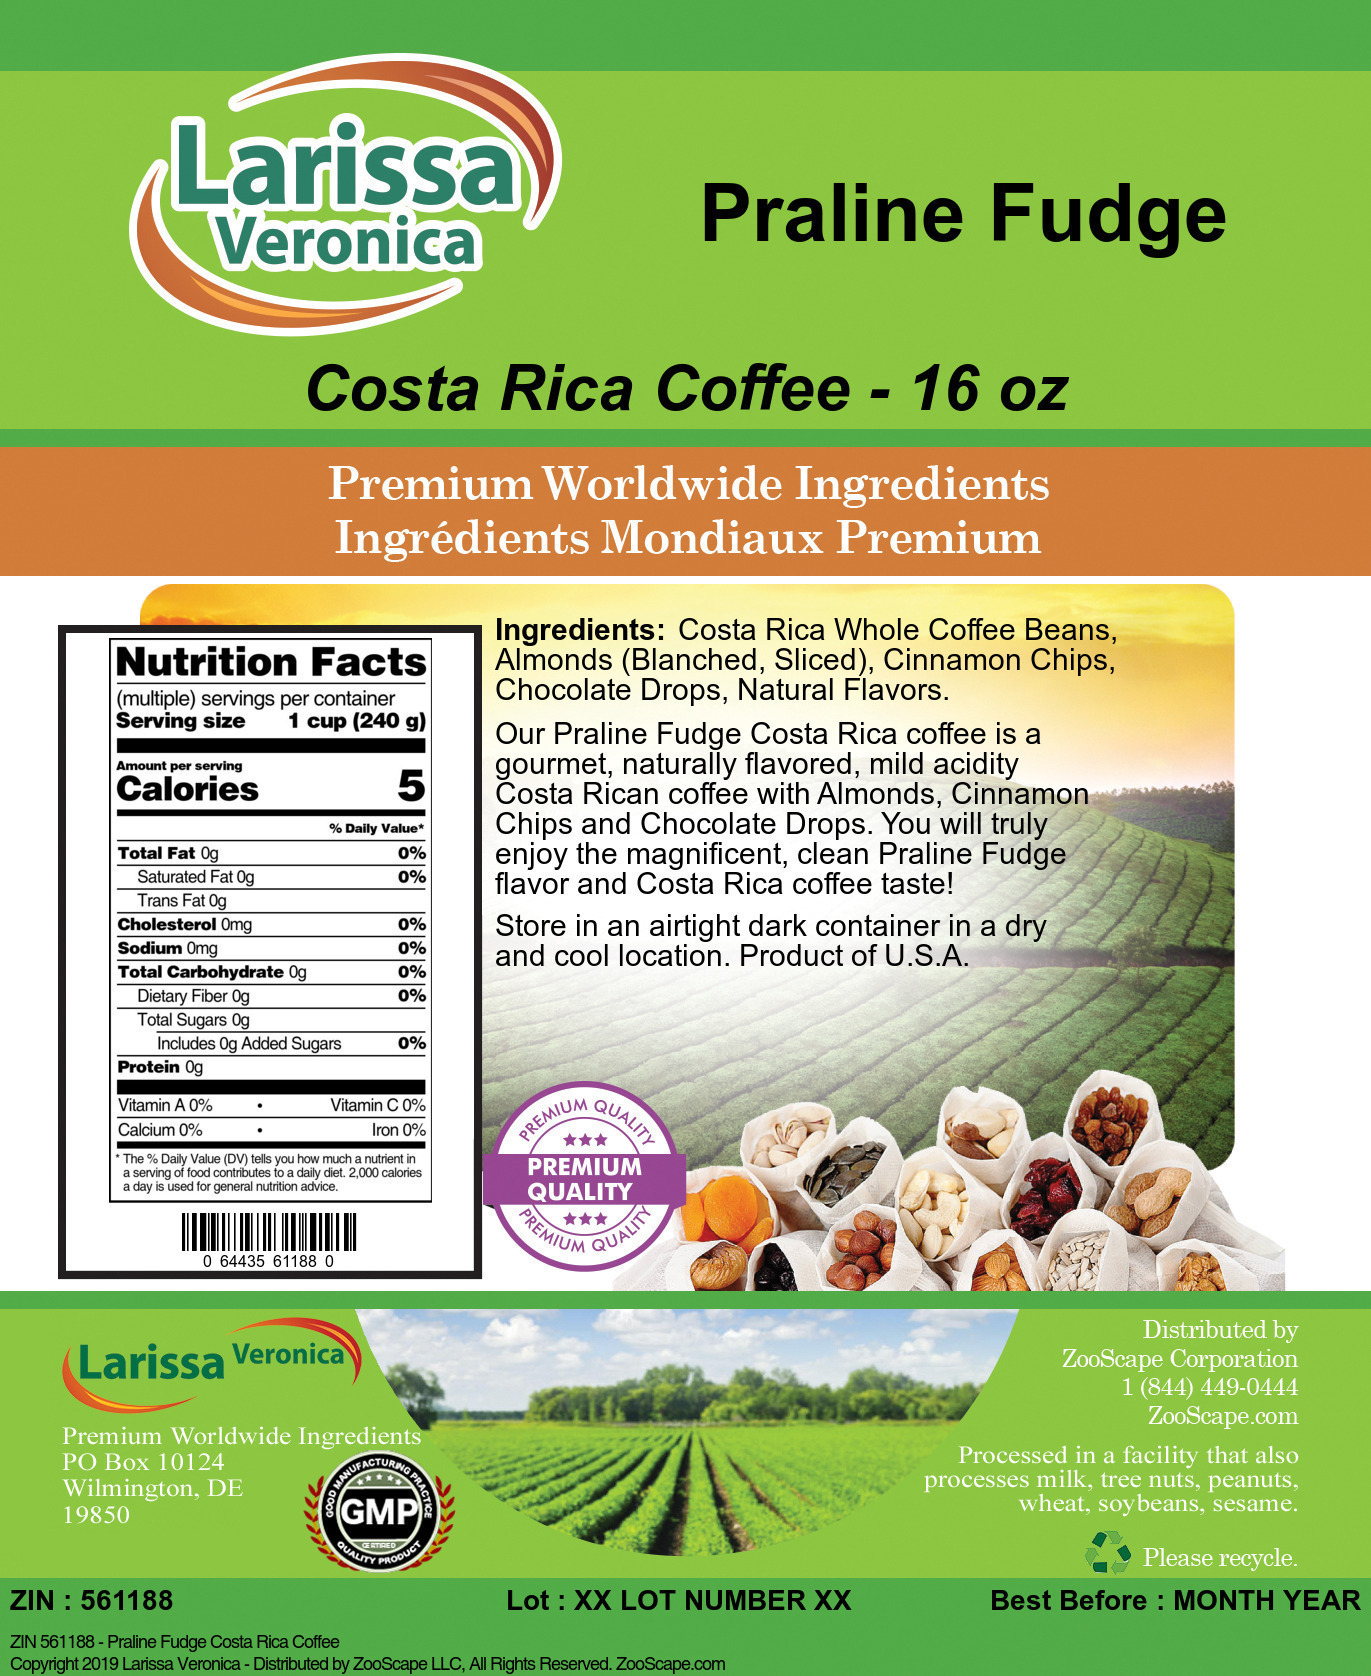 Praline Fudge Costa Rica Coffee - Label